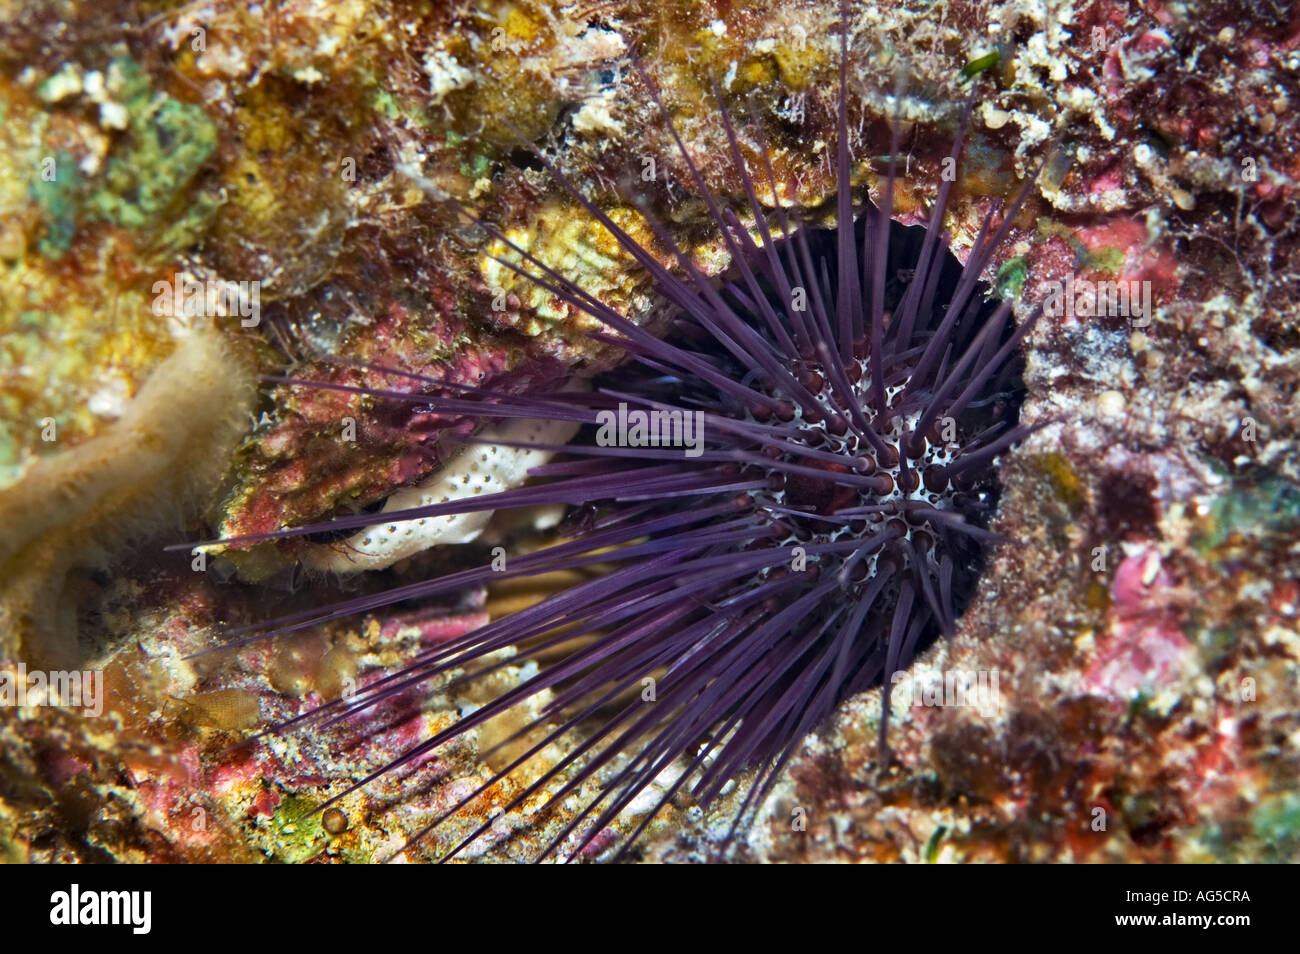 close-up of urchin Stock Photo